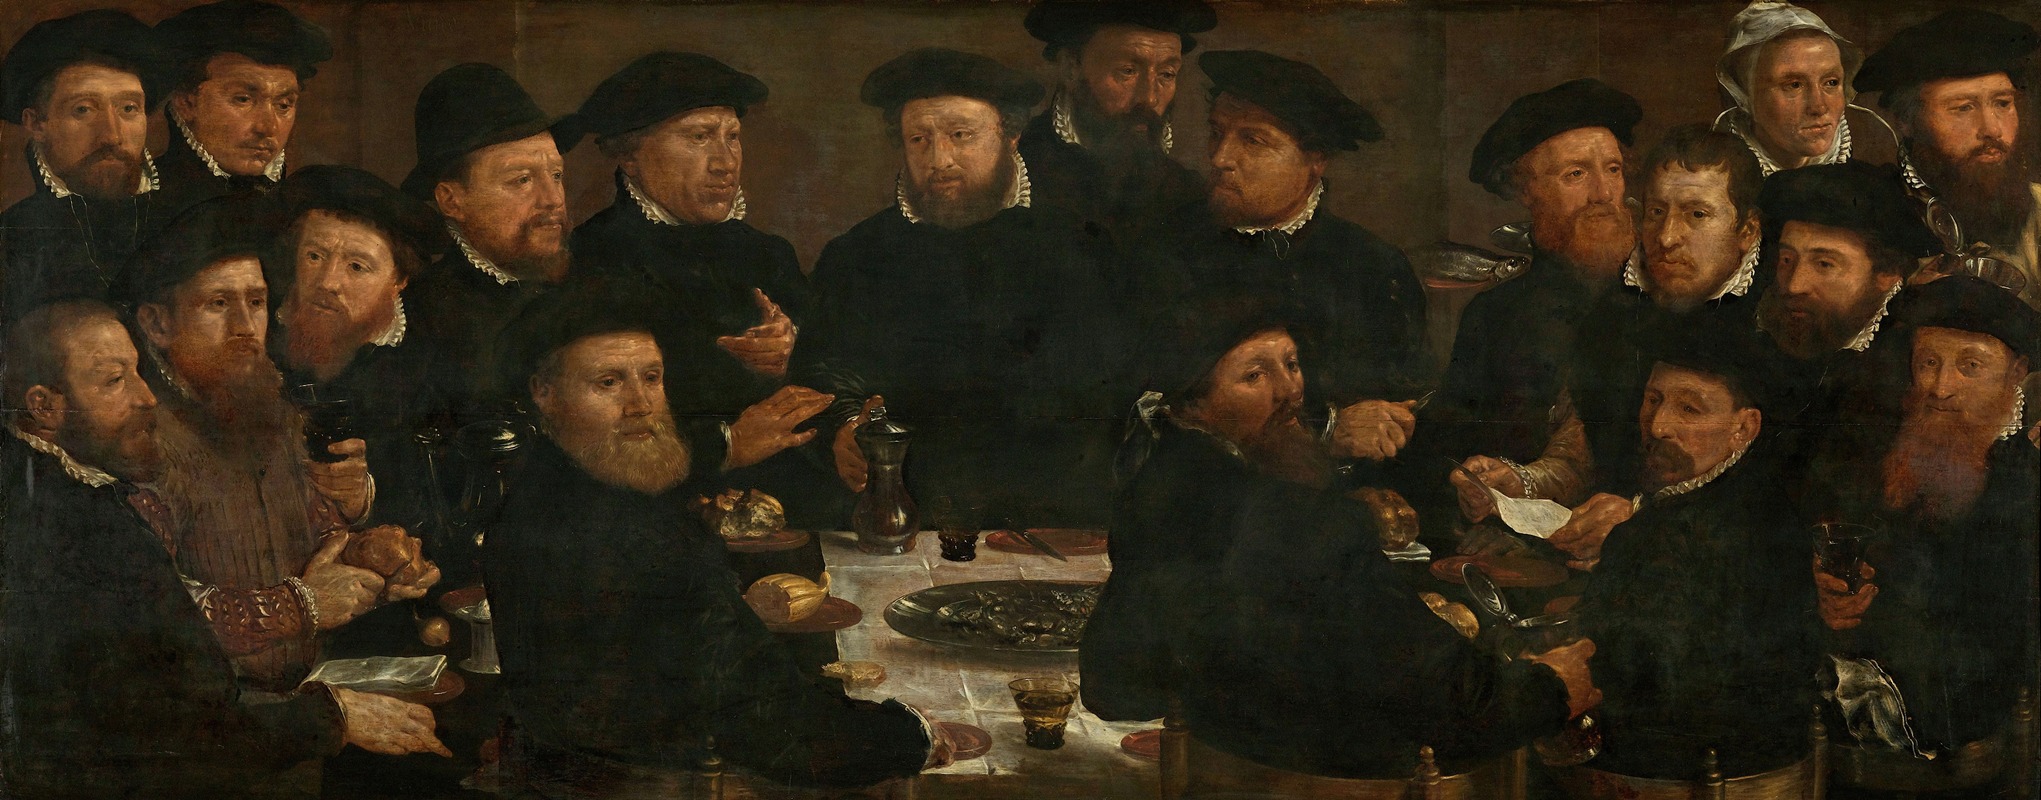 Dirck Barendsz. - Banquet of Eighteen Guardsmen of Squad L, Amsterdam 1566, known as ‘The Perch Eaters’